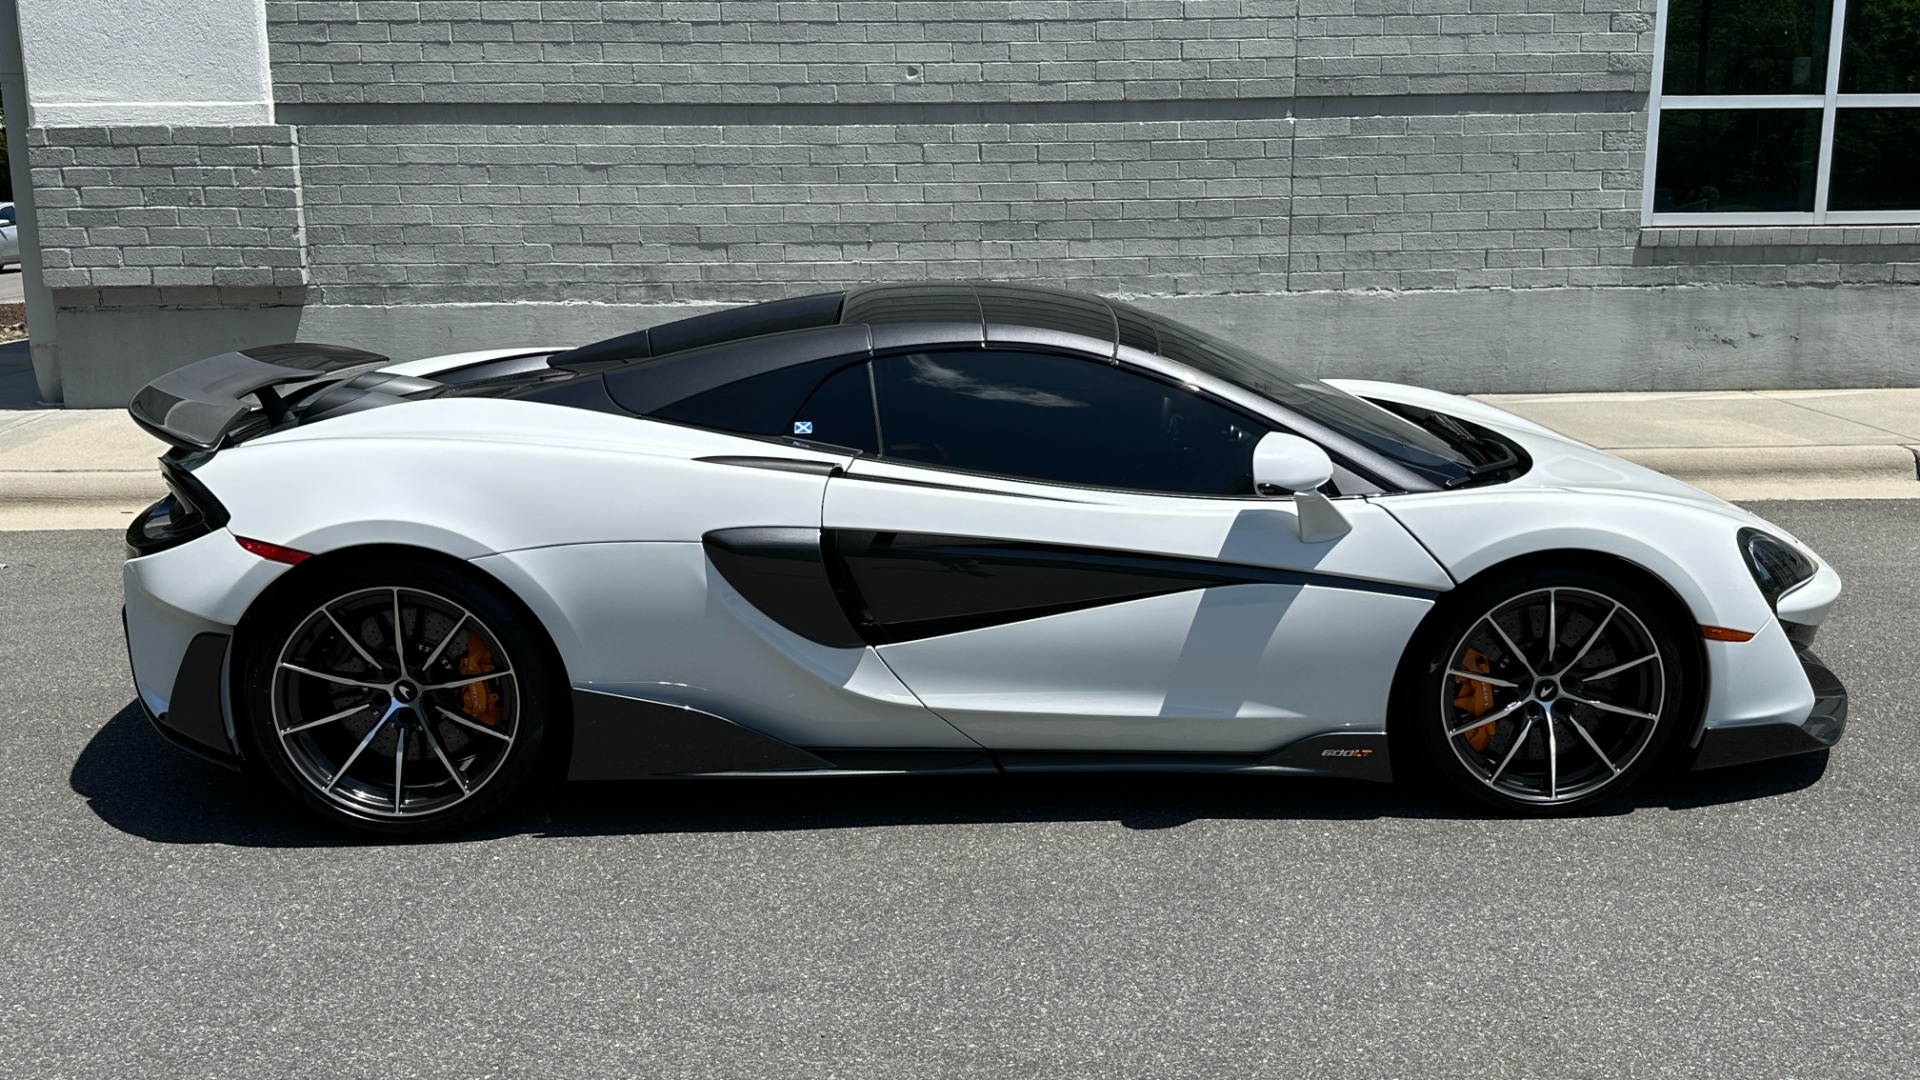 Used 2020 McLaren 600LT SPIDER / FRONT PPF / LEATHER INT / MSO BELTS / CARBON FIBER INT for sale $295,000 at Formula Imports in Charlotte NC 28227 7